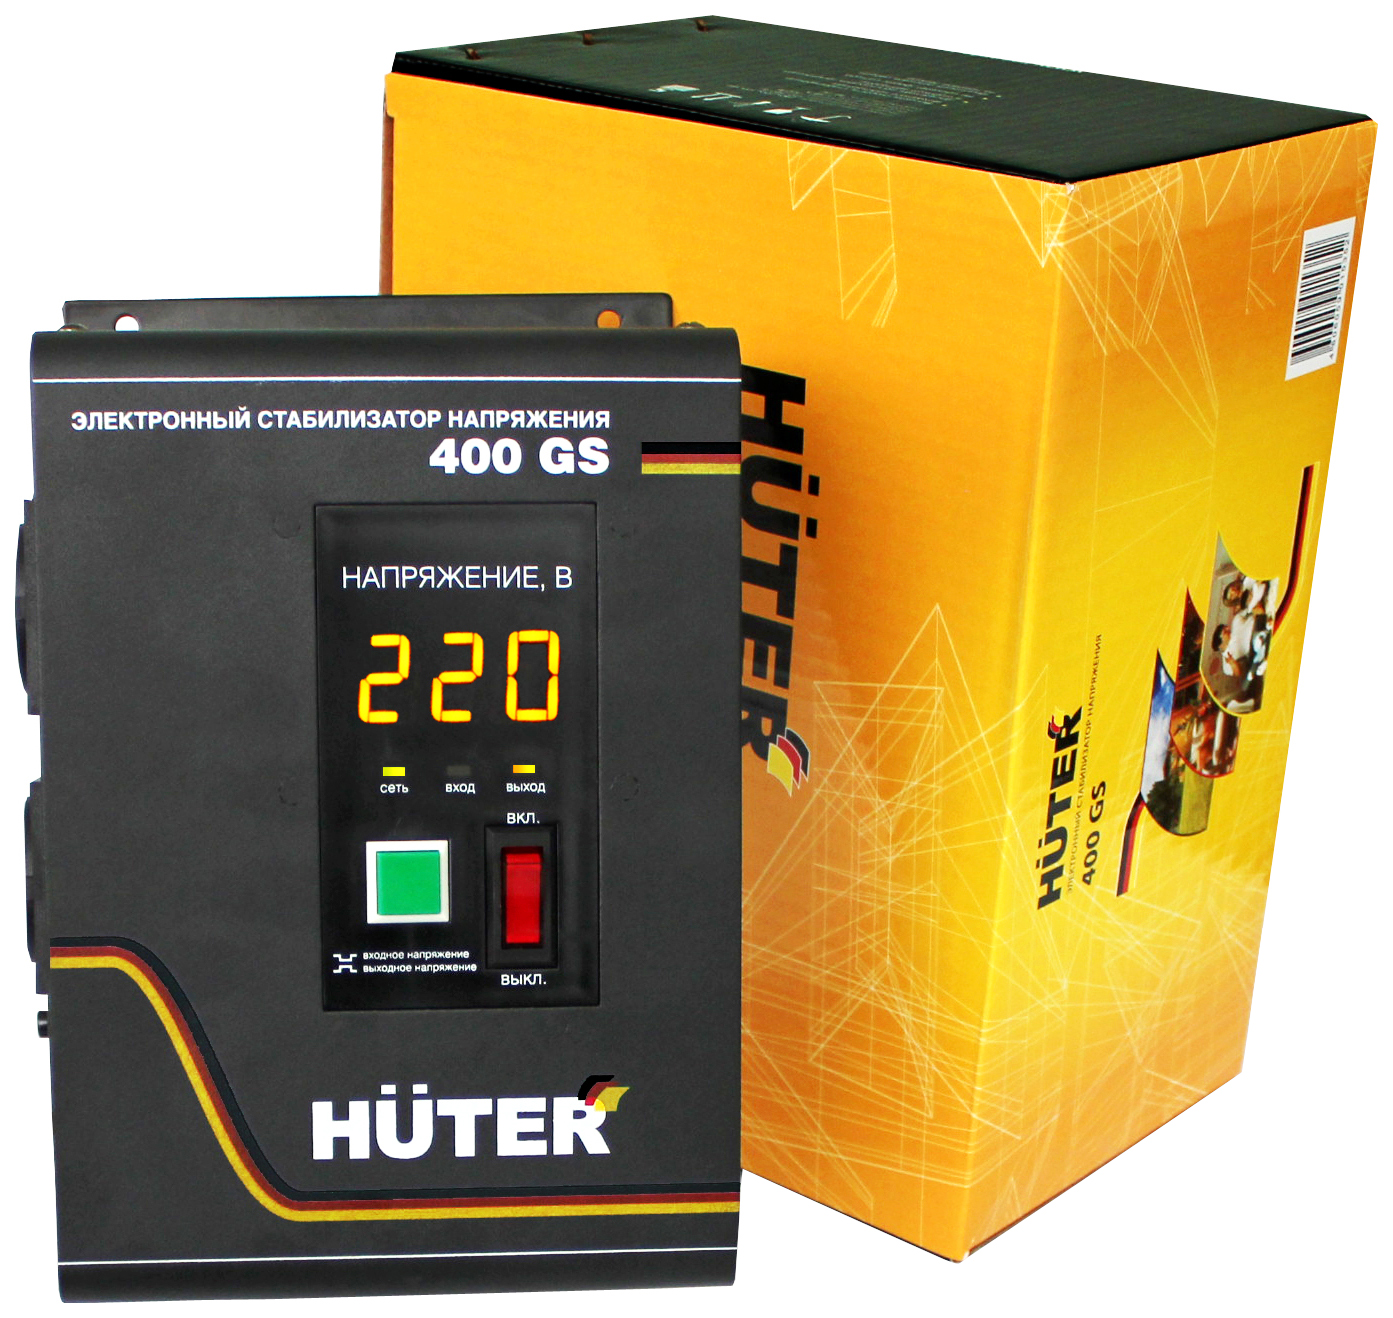 Однофазный стабилизатор Huter 400GS стабилизатор напряжения huter